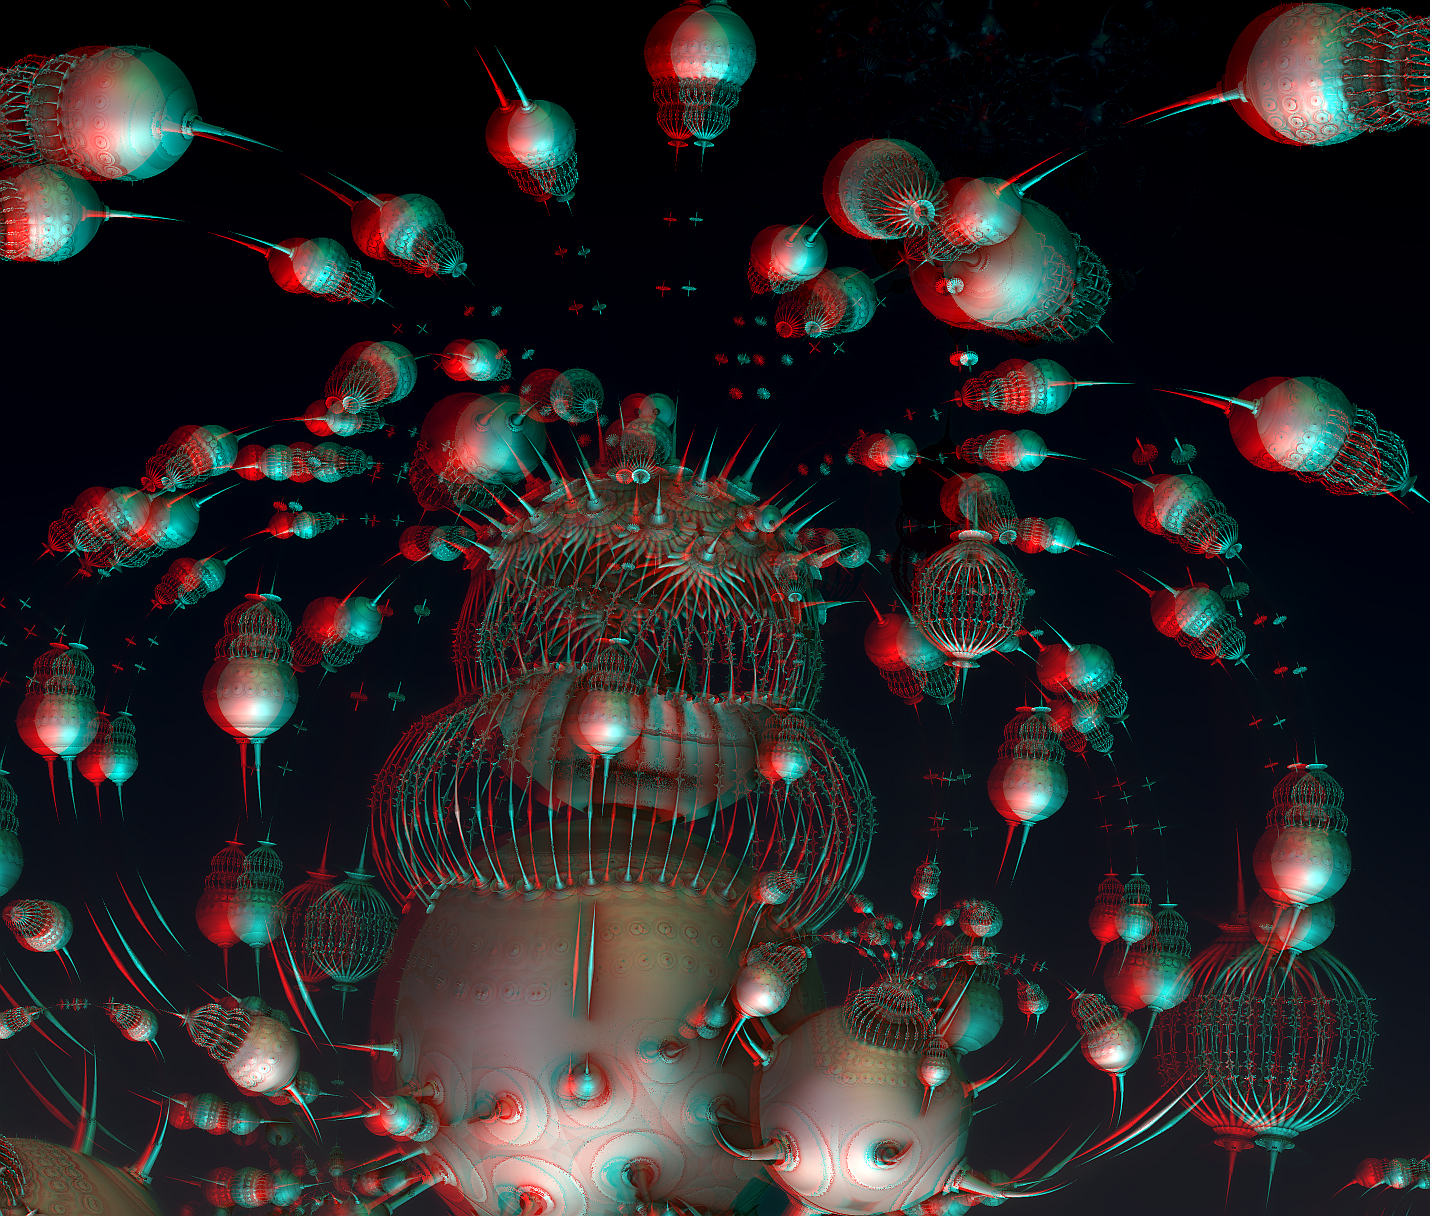 Spiderweb Anaglyph 3D Stereoscopy by Osipenkov on DeviantArt